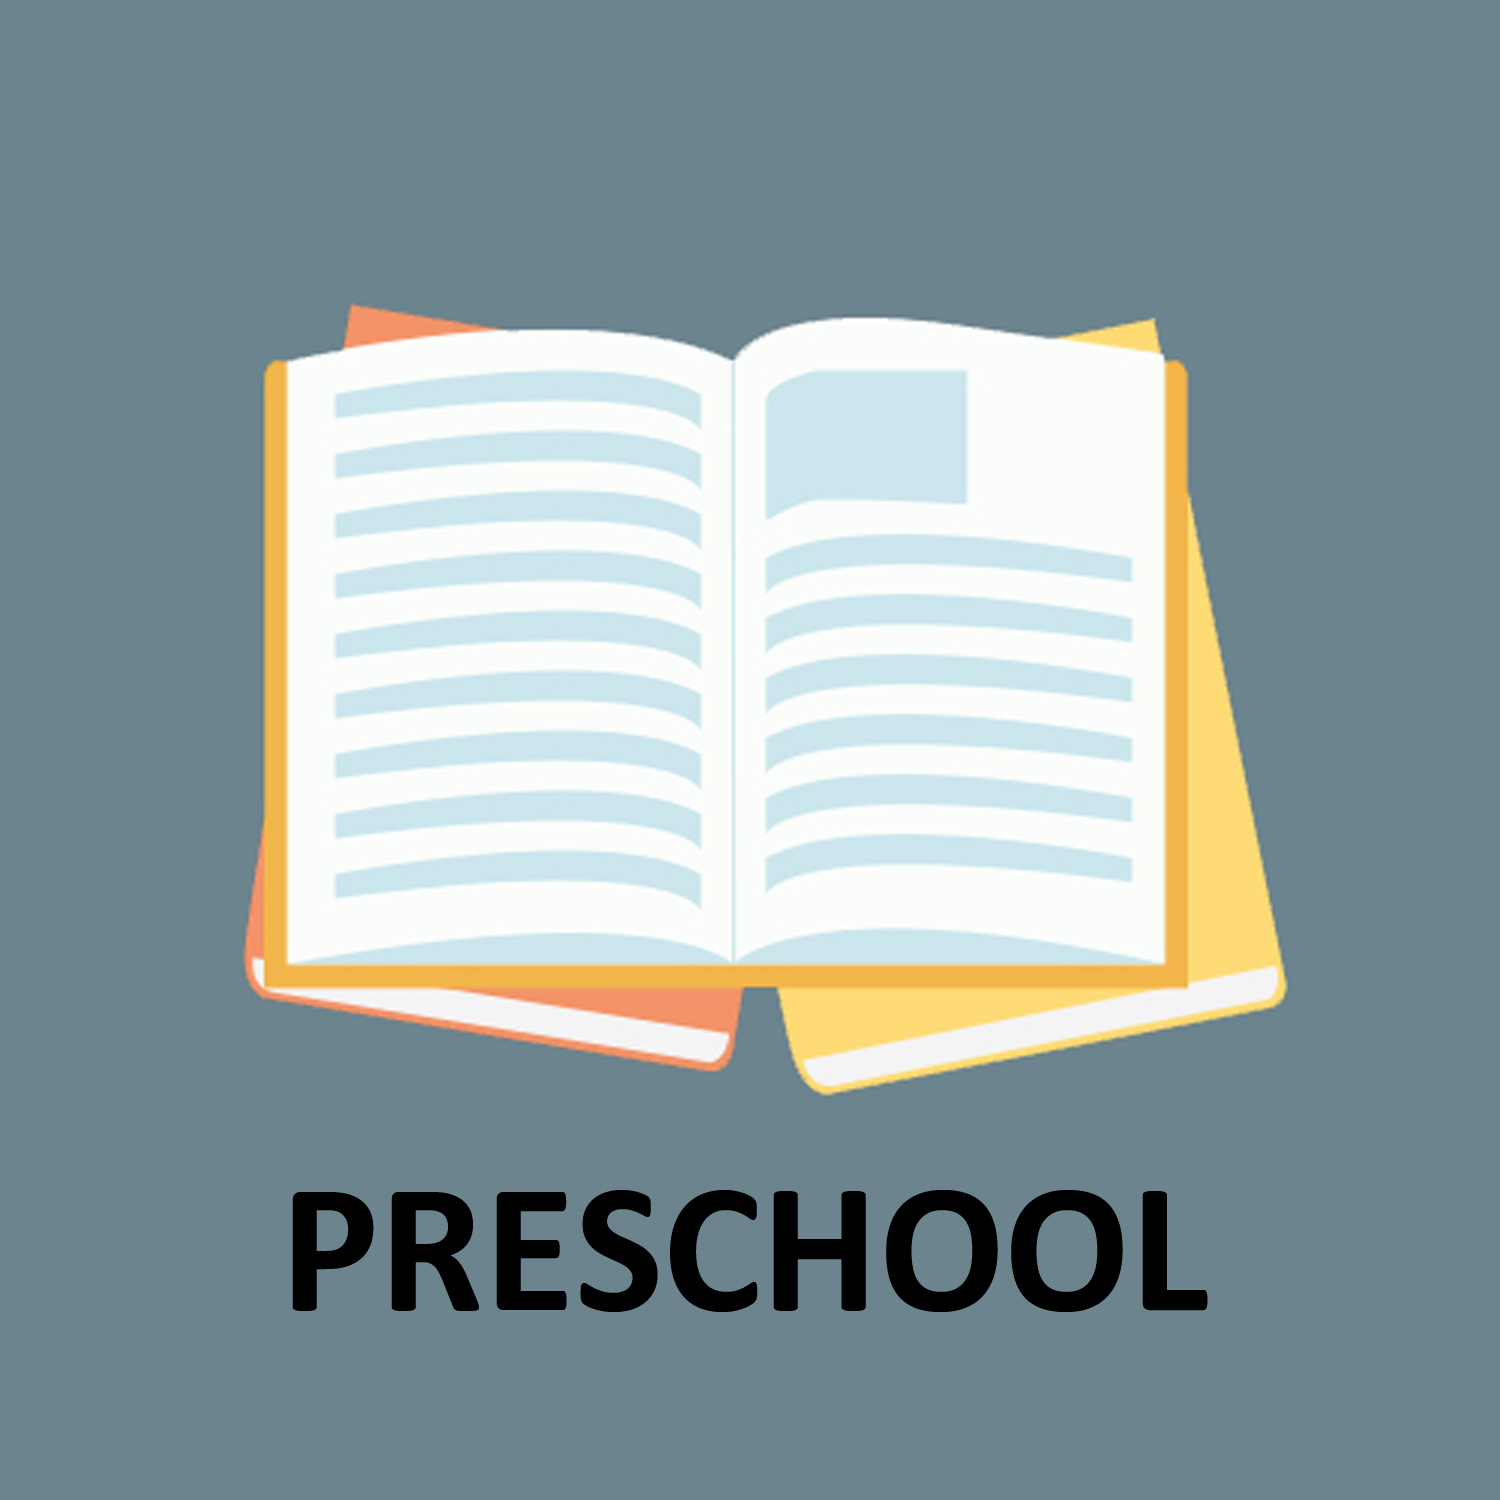 Free Preschool Curriculum App - a simple and effective preschool curriculum for 4 year olds